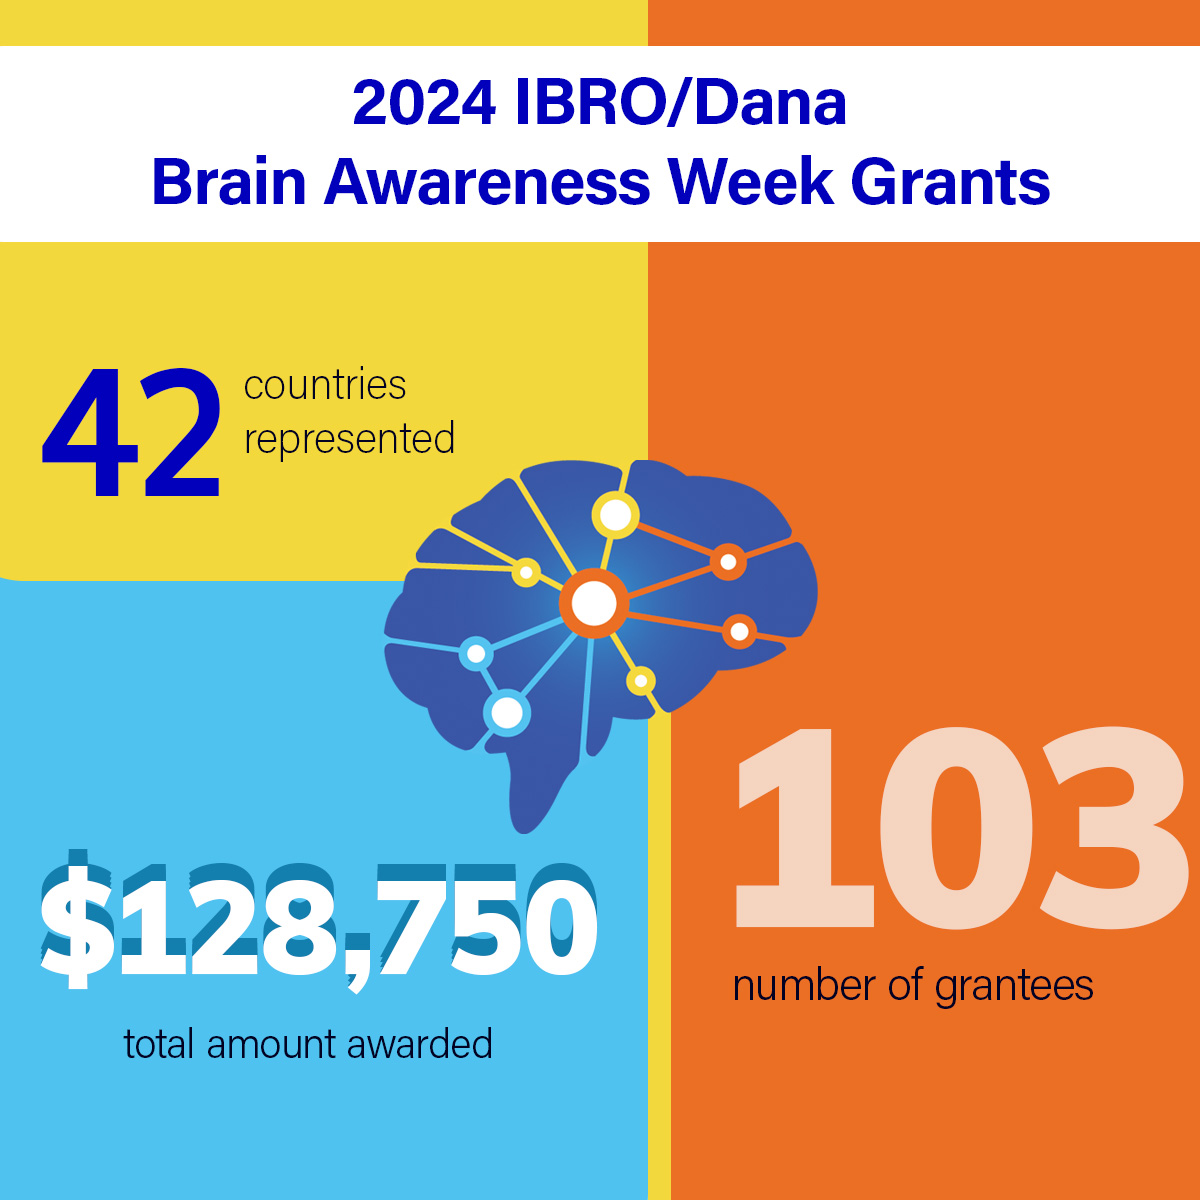 Infographic of 2024 IBRO/Dana Brain Awareness Week grants